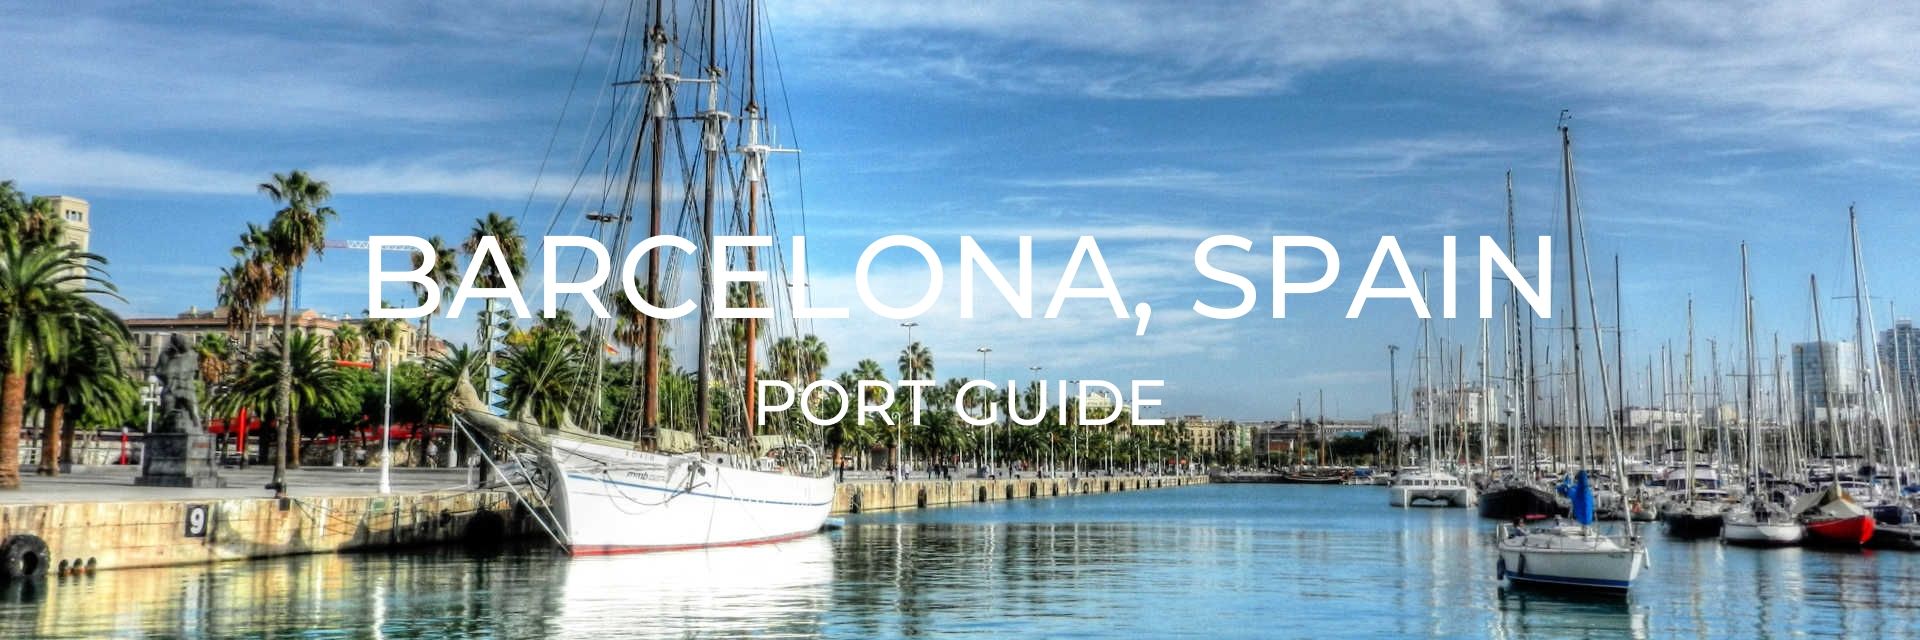 cruise port in barcelona address